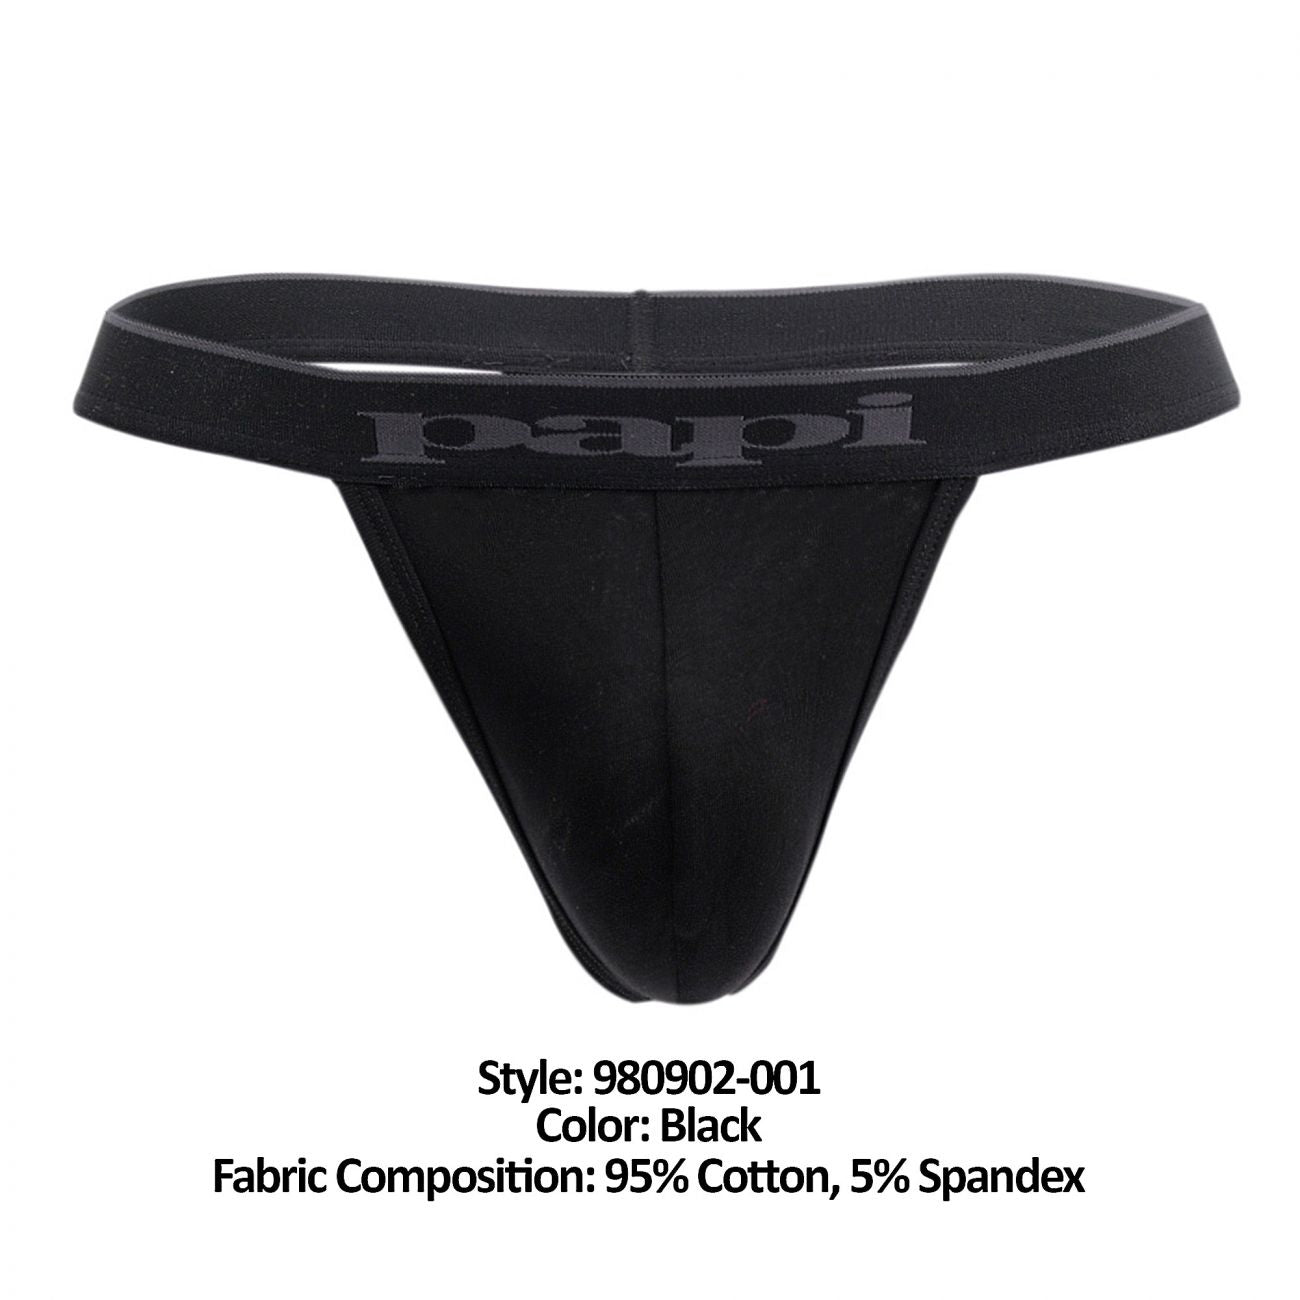 Papi 980902-001 3PK Cotton Stretch Thong Black